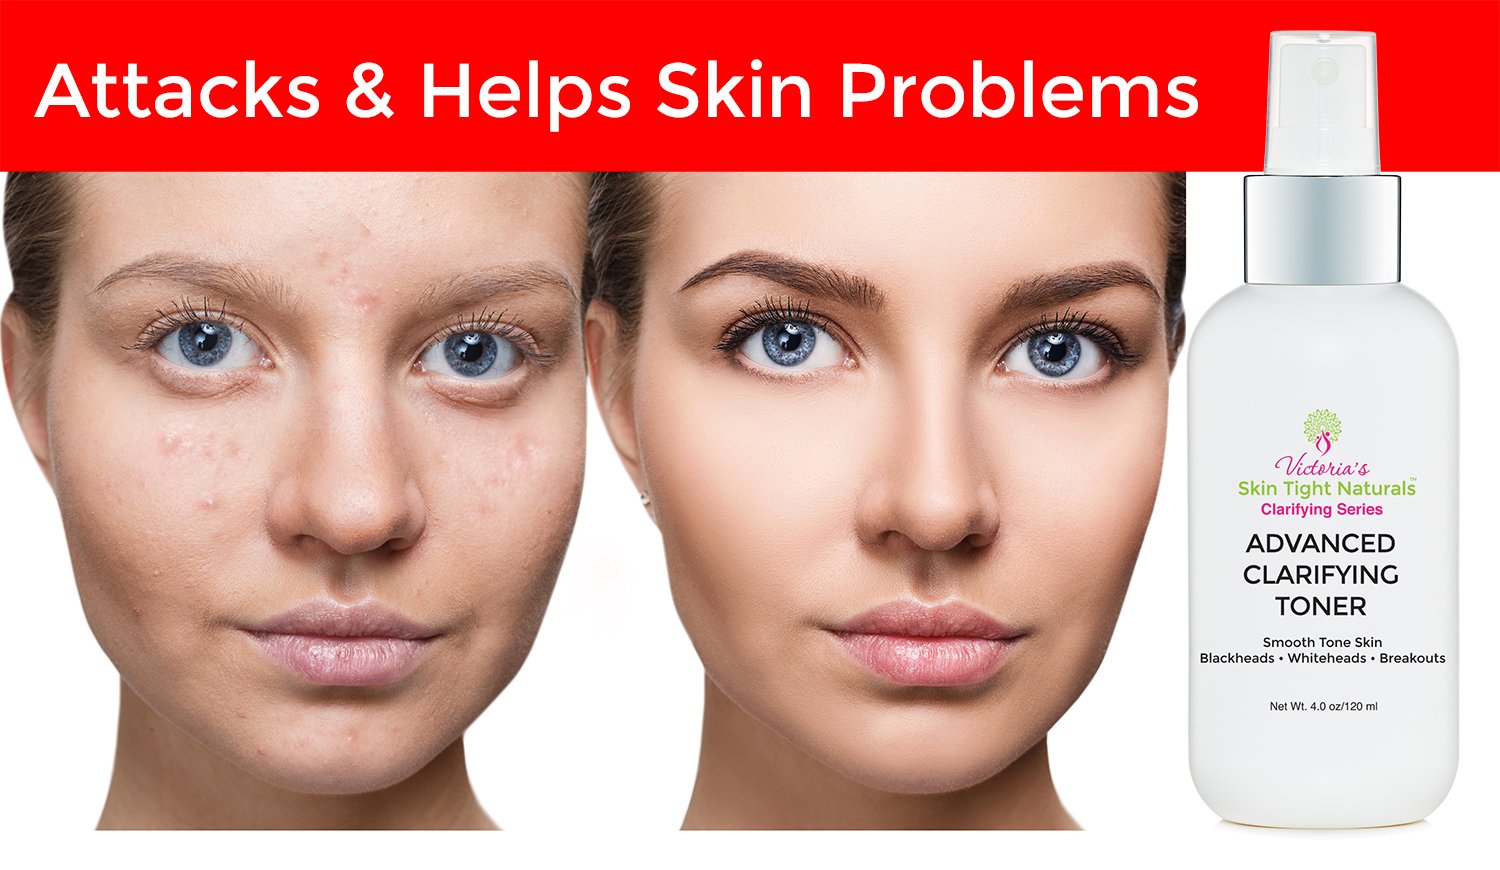 Taking Care Of Acne-Prone Skin